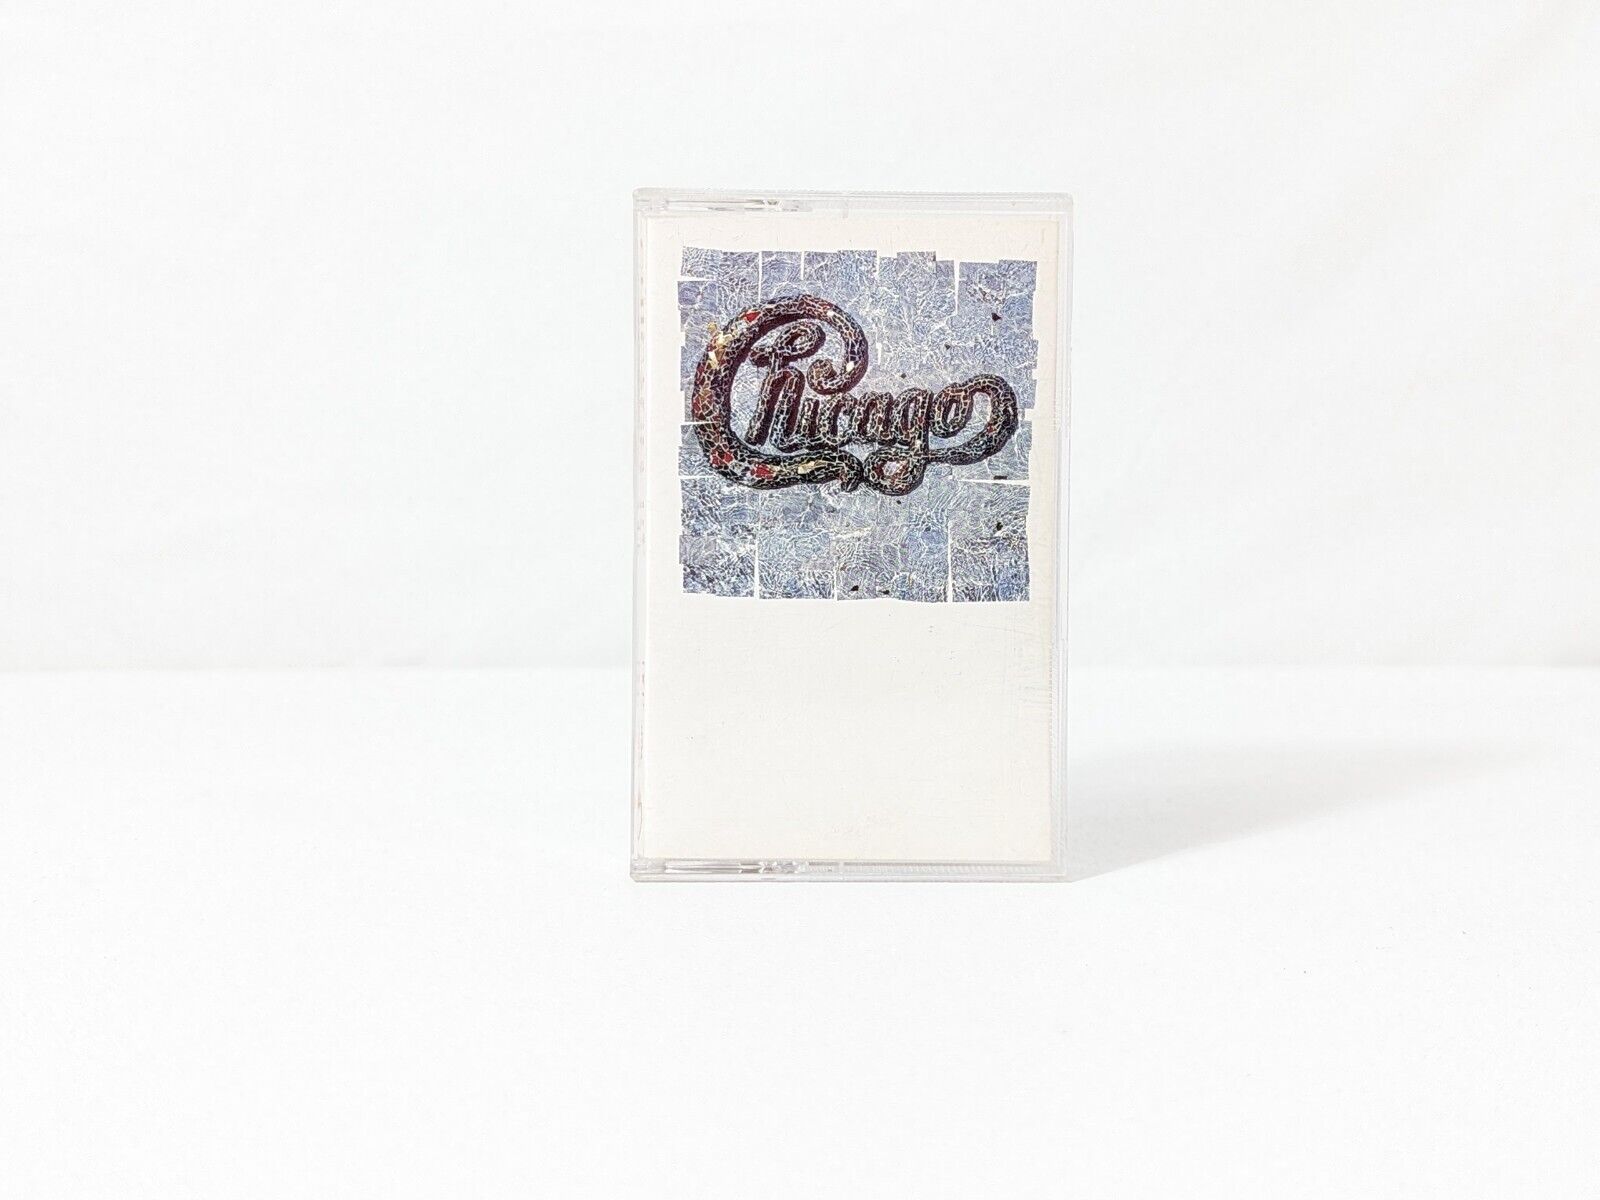 CHICAGO Cassette Tape CHICAGO 18 1986 Rock Pop Rare